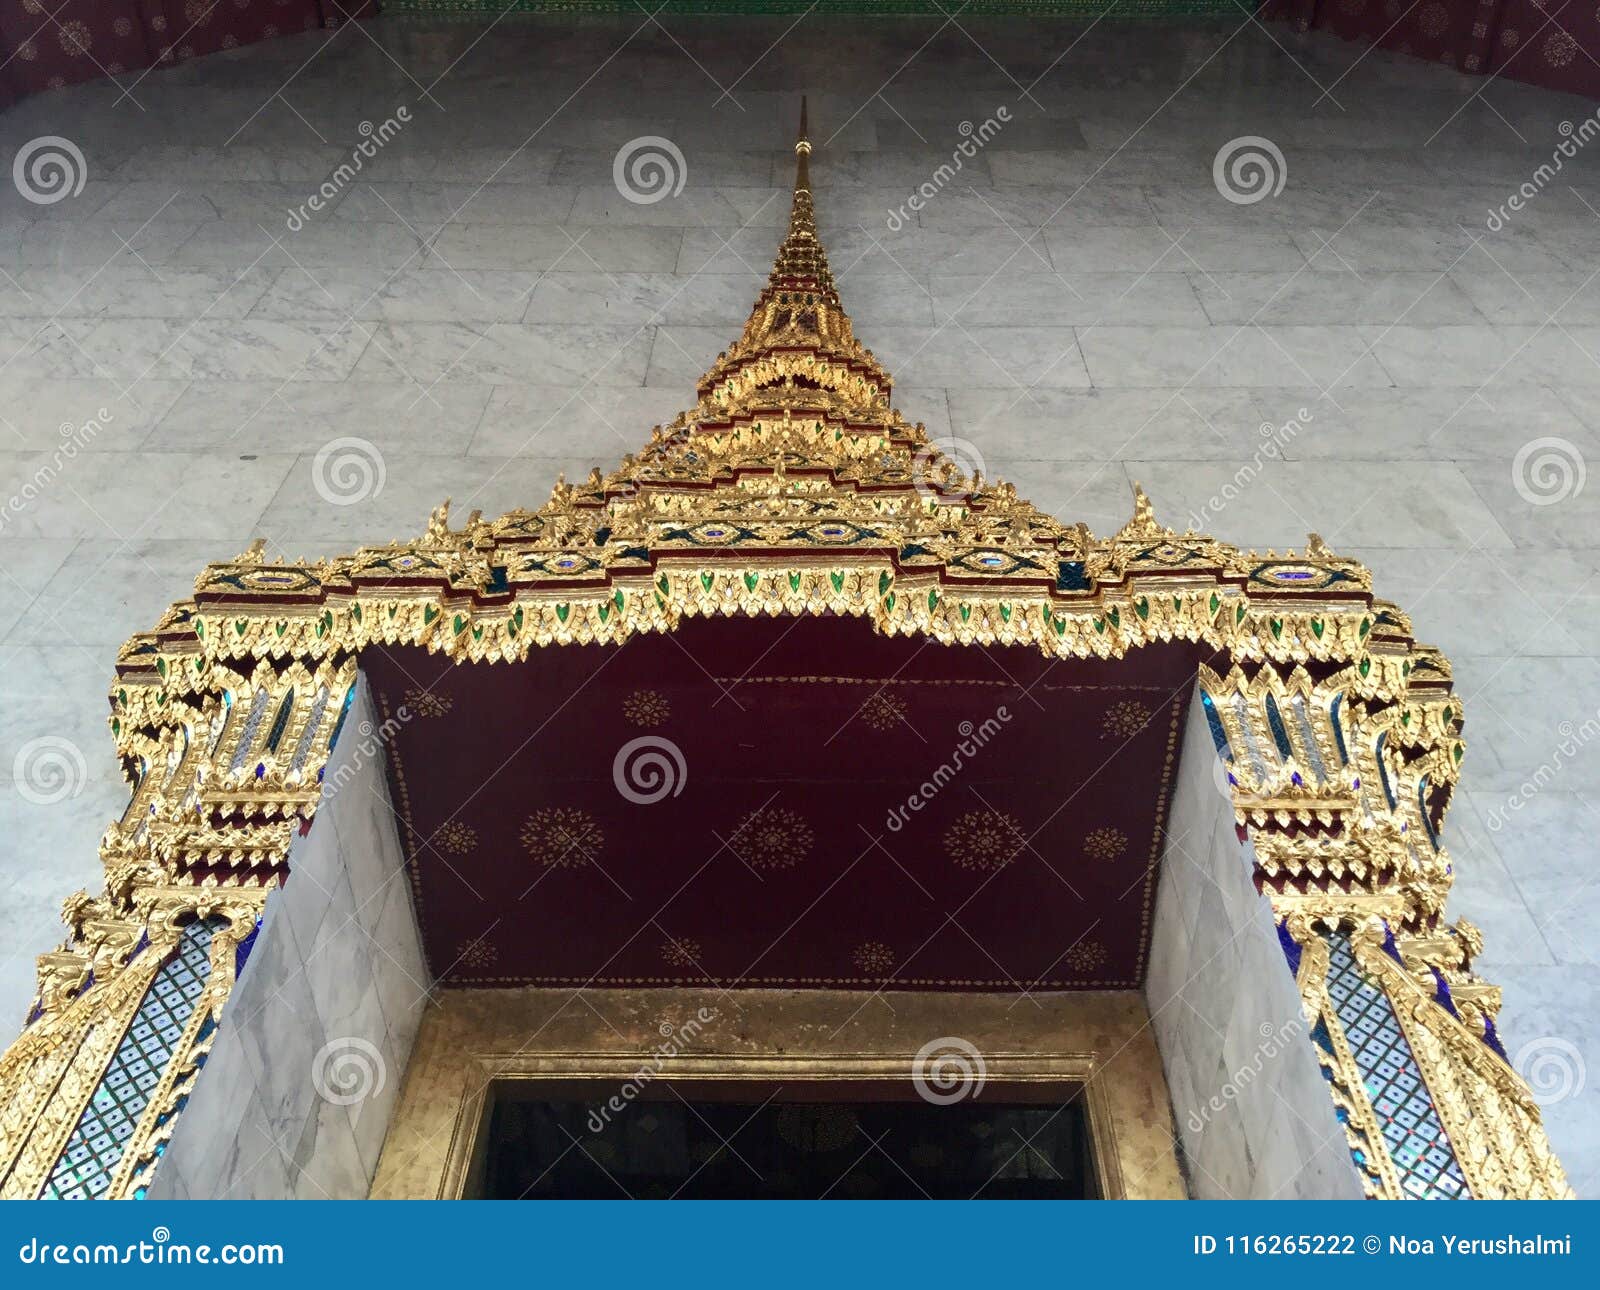 temple door decoration, thailand